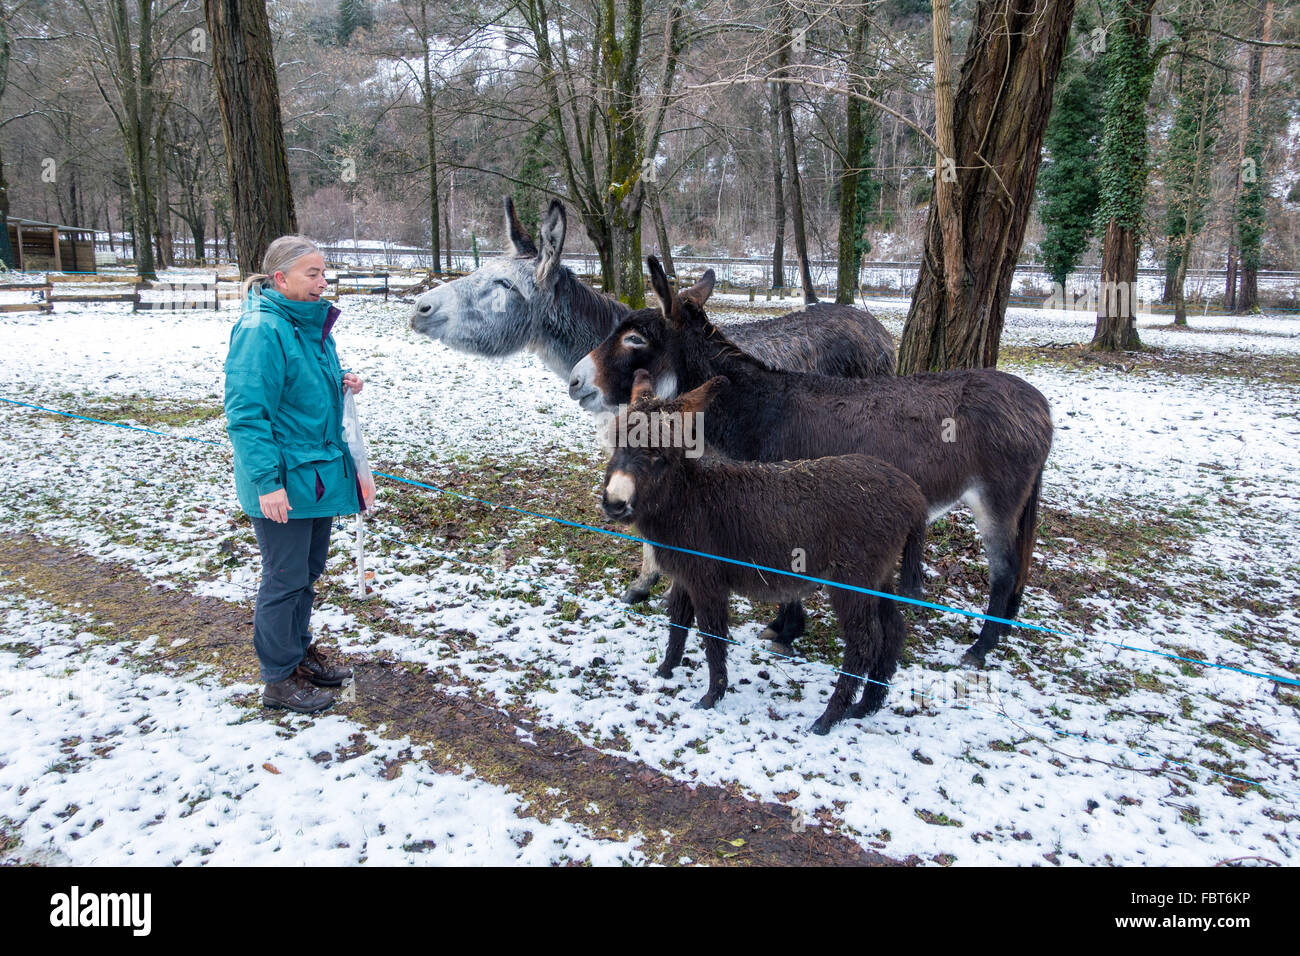 Female in blue coat feeding three donkeys, with snow and trees Stock Photo